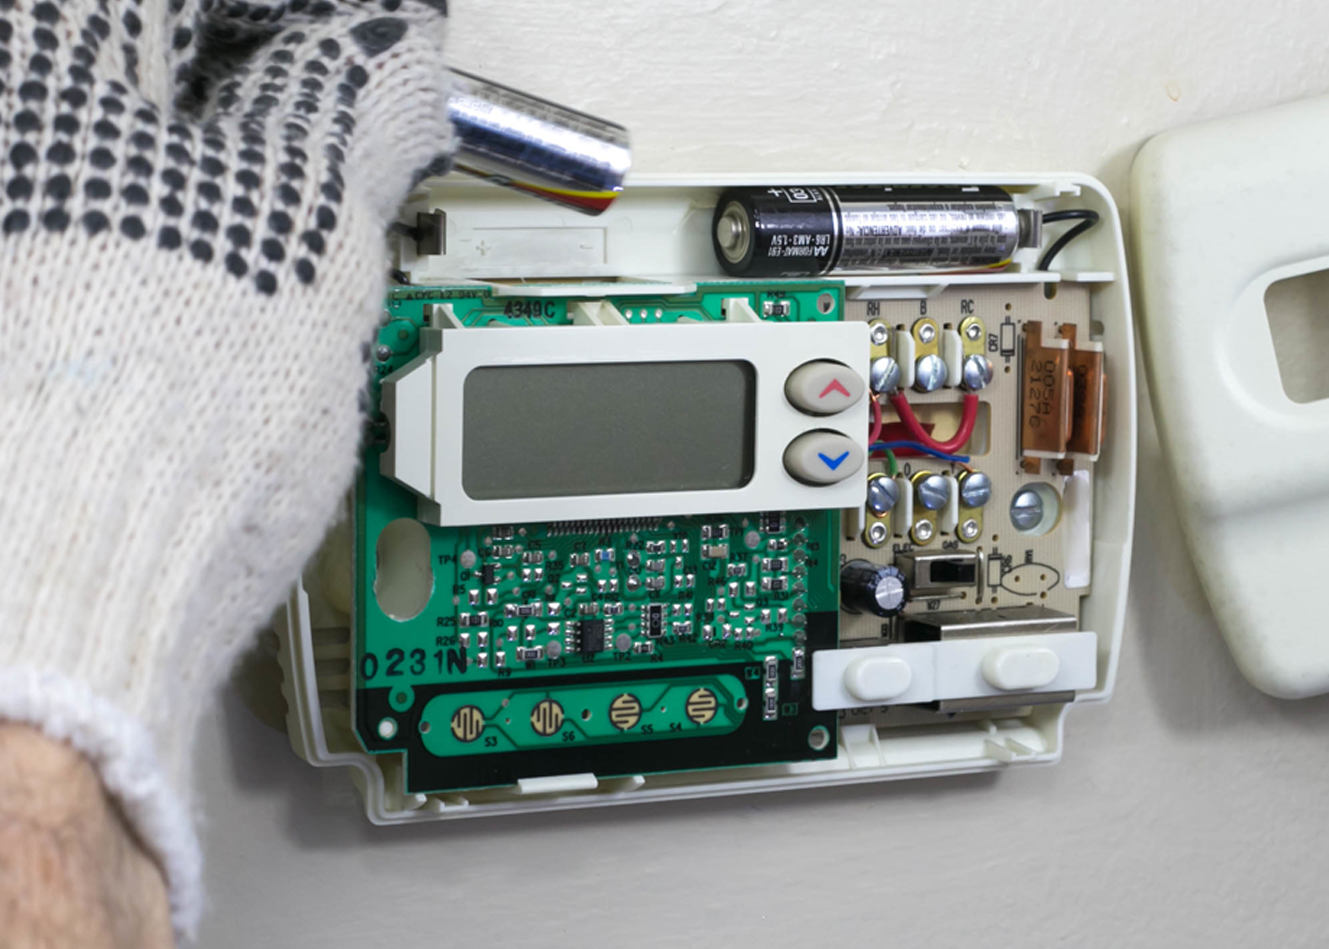 https://smoenergy.com/wp-content/uploads/2020/02/Thermostat-Battery-Blog-Cover-Image.jpg